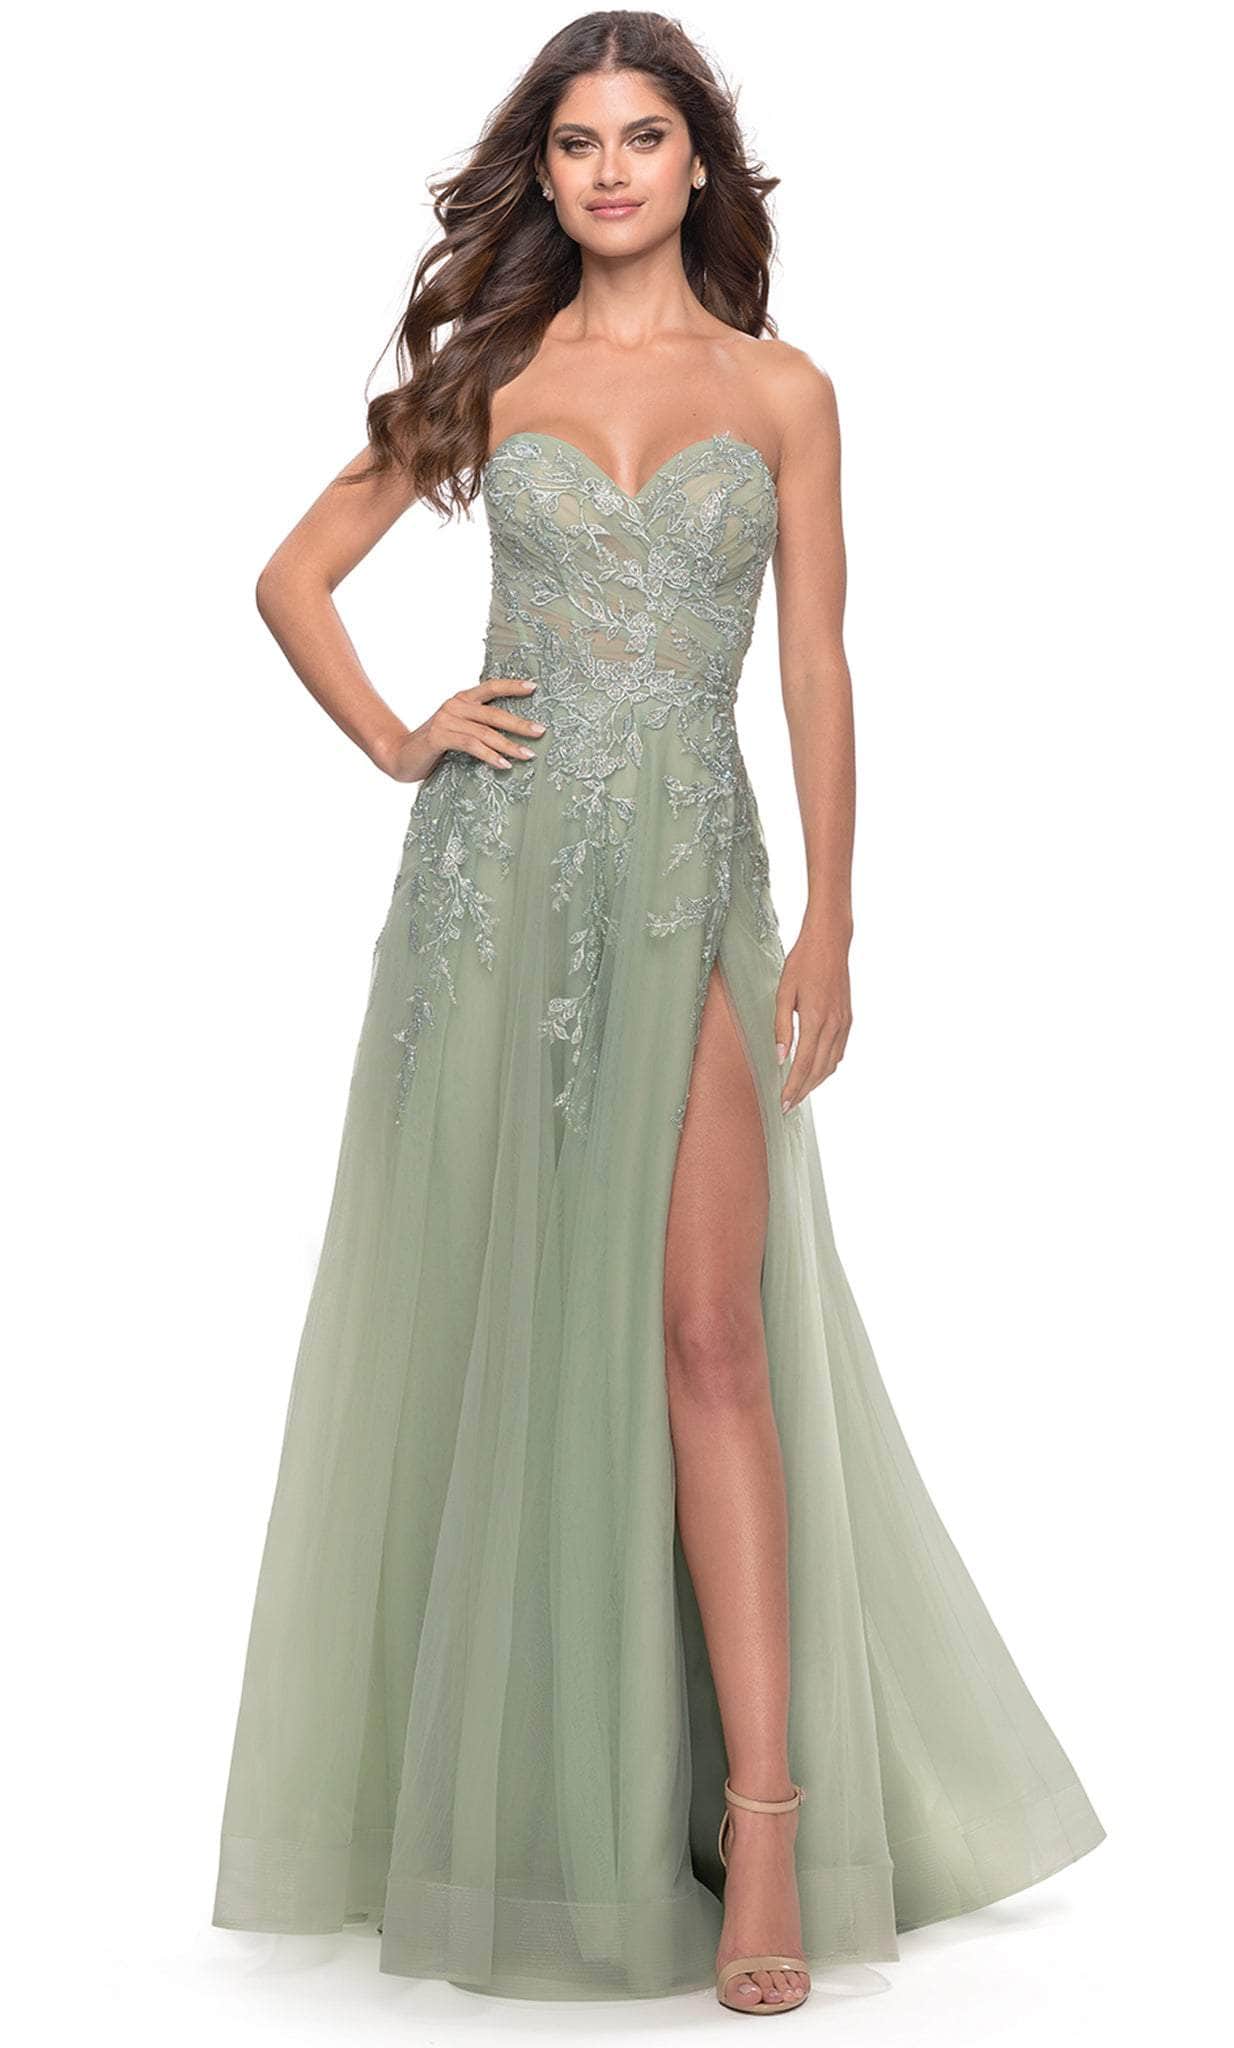 La Femme 31363 - Appliqued Sweetheart Evening Dress
